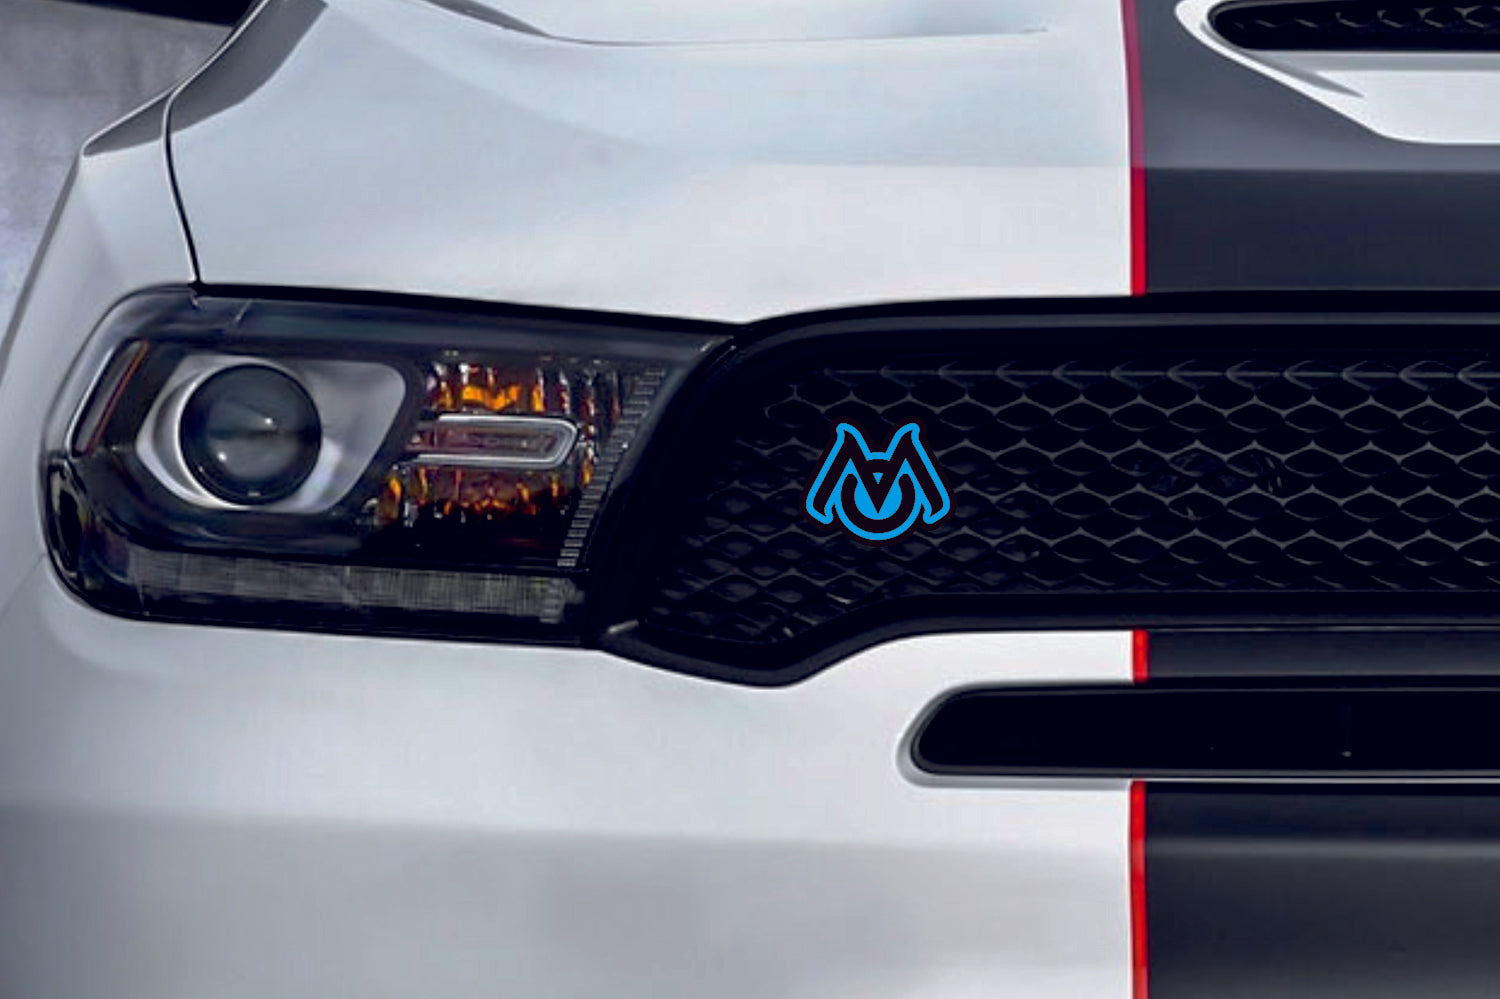 Chrysler Radiator grille emblem with Mopar logo (type 4) - decoinfabric